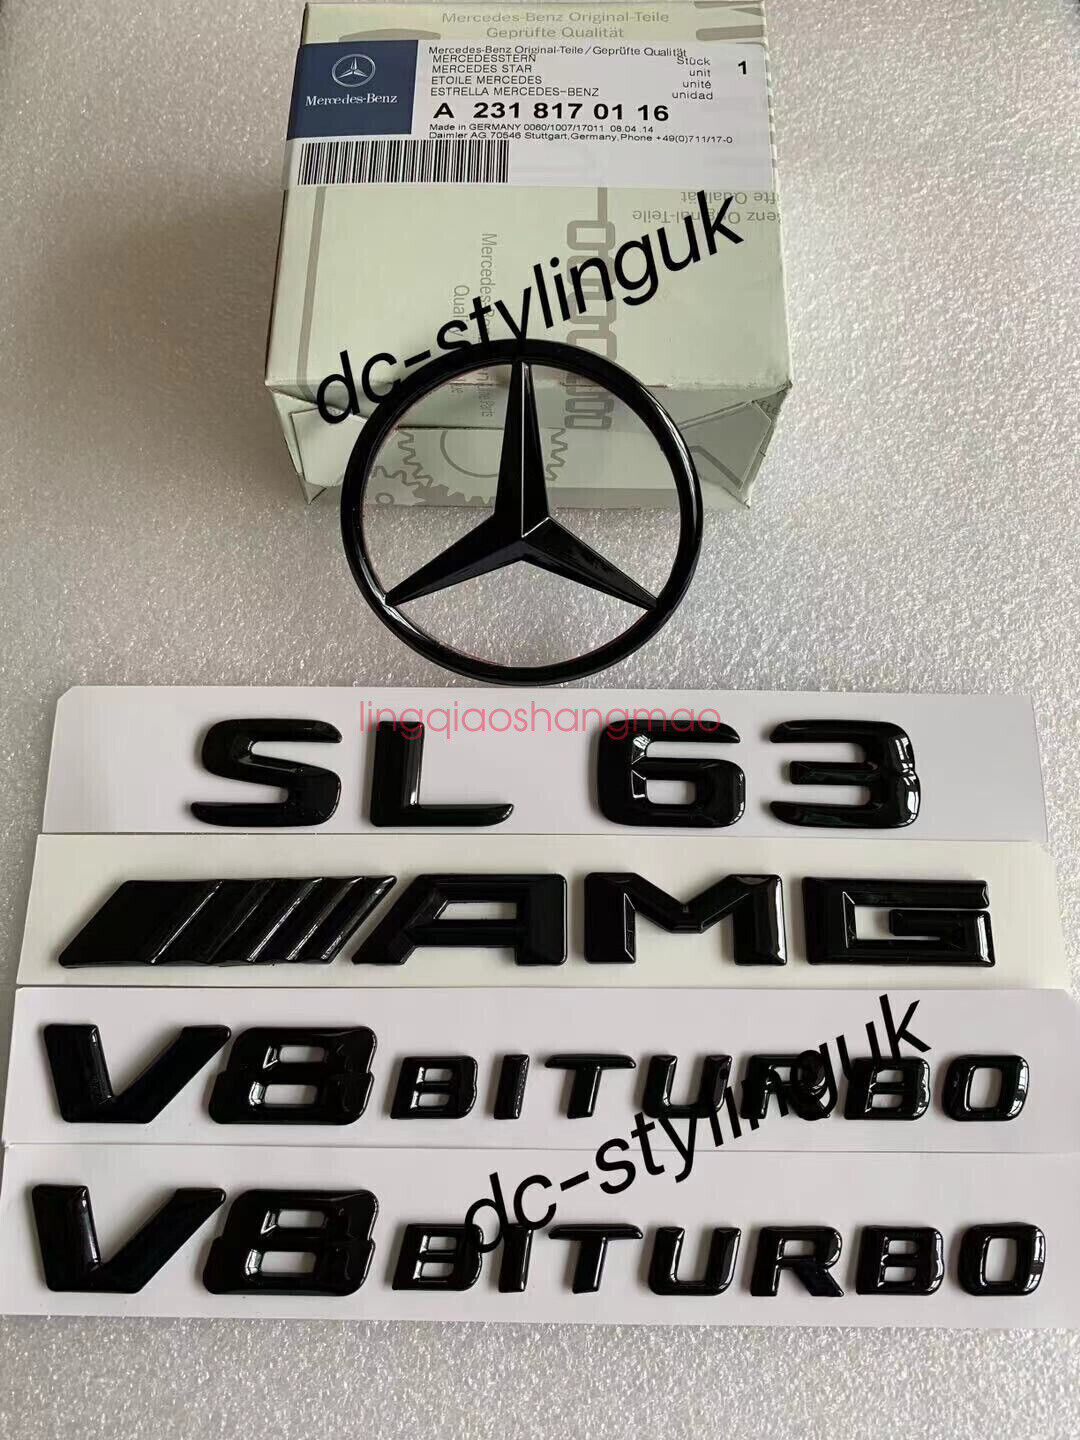 Gloss Black Rear Star & Badges Emblems for Mercedes SL63 AMG R231